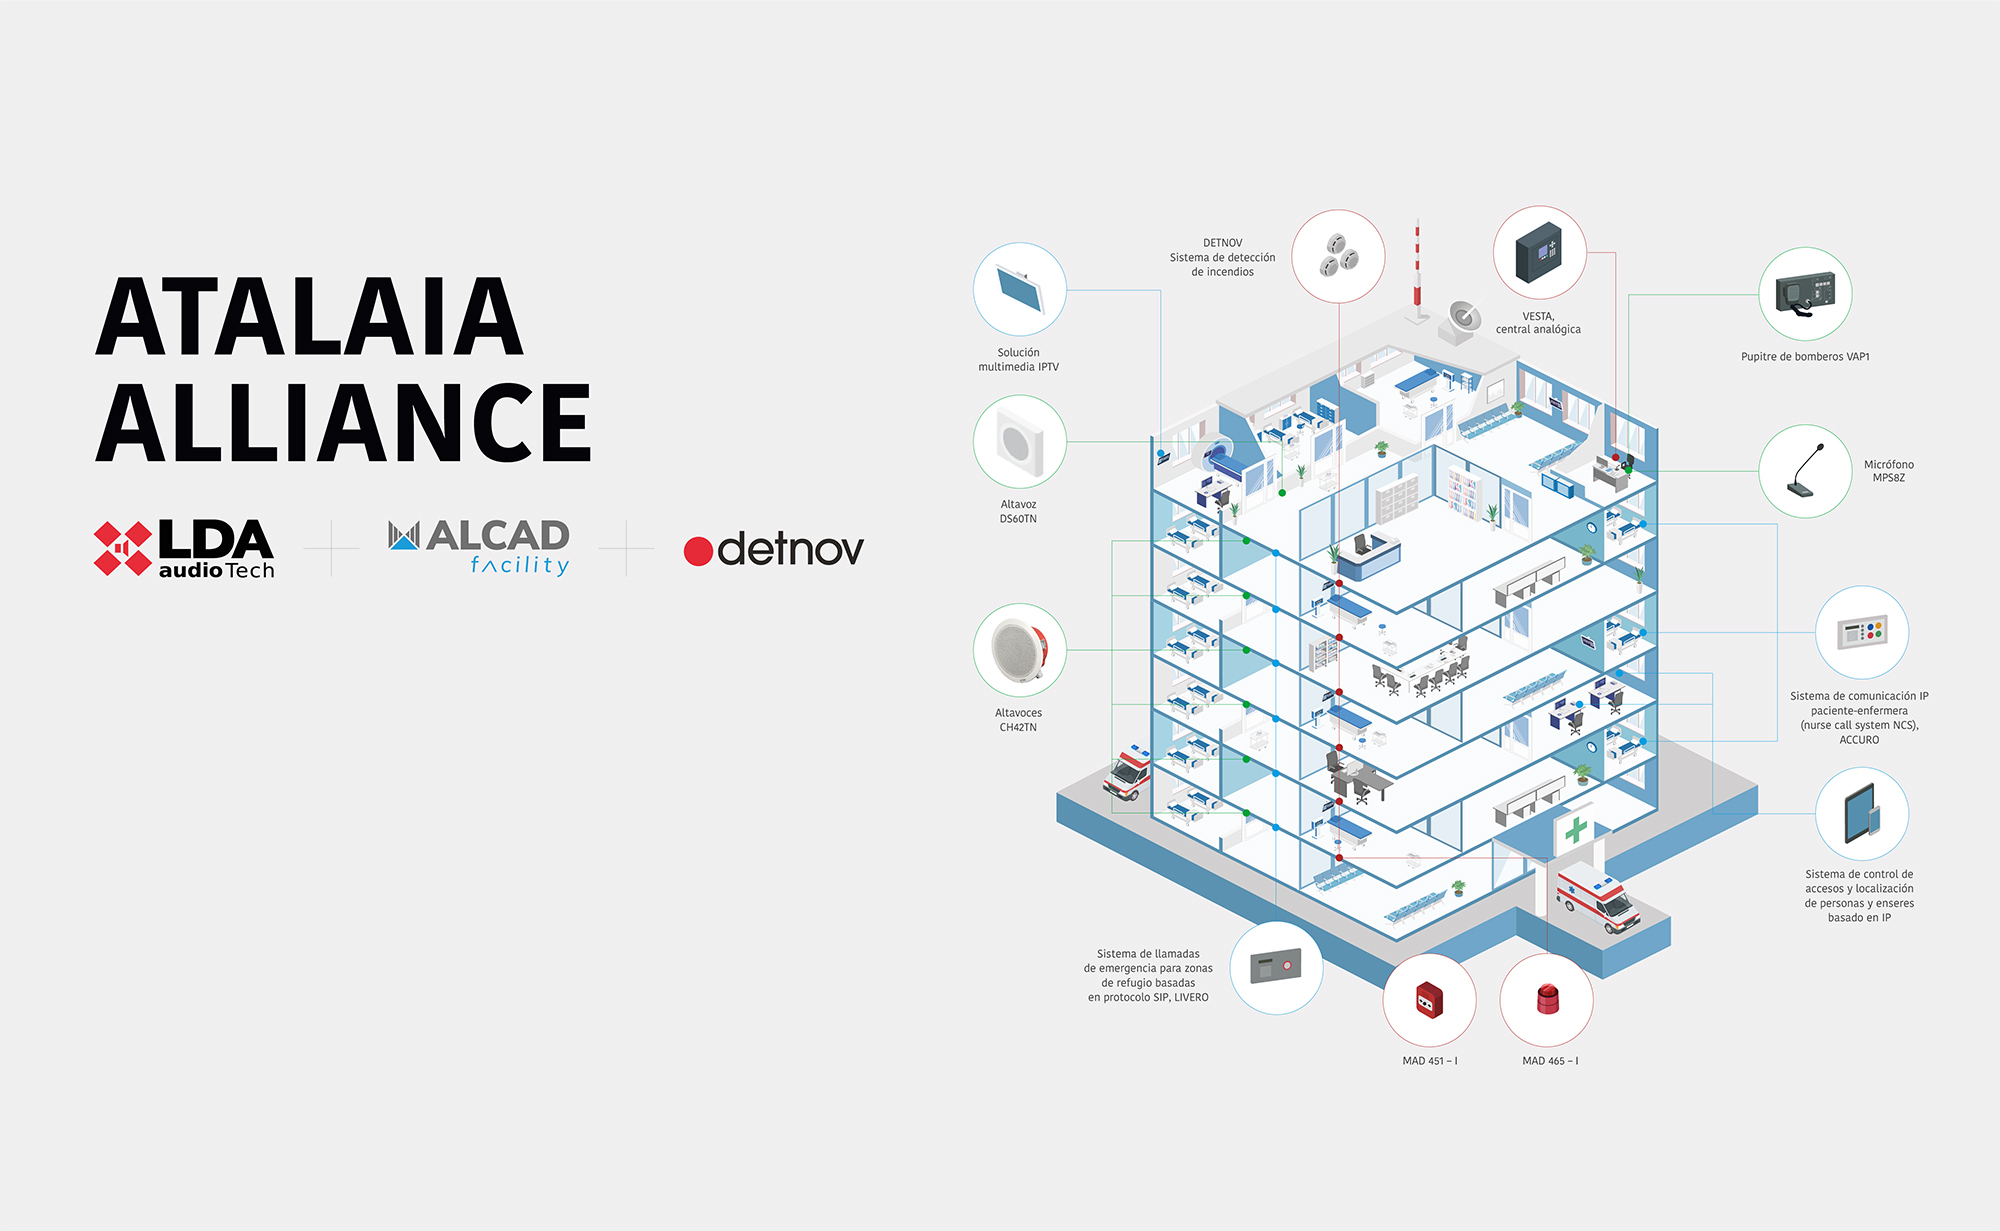 Atalaia Alliance, a new integrated security platform